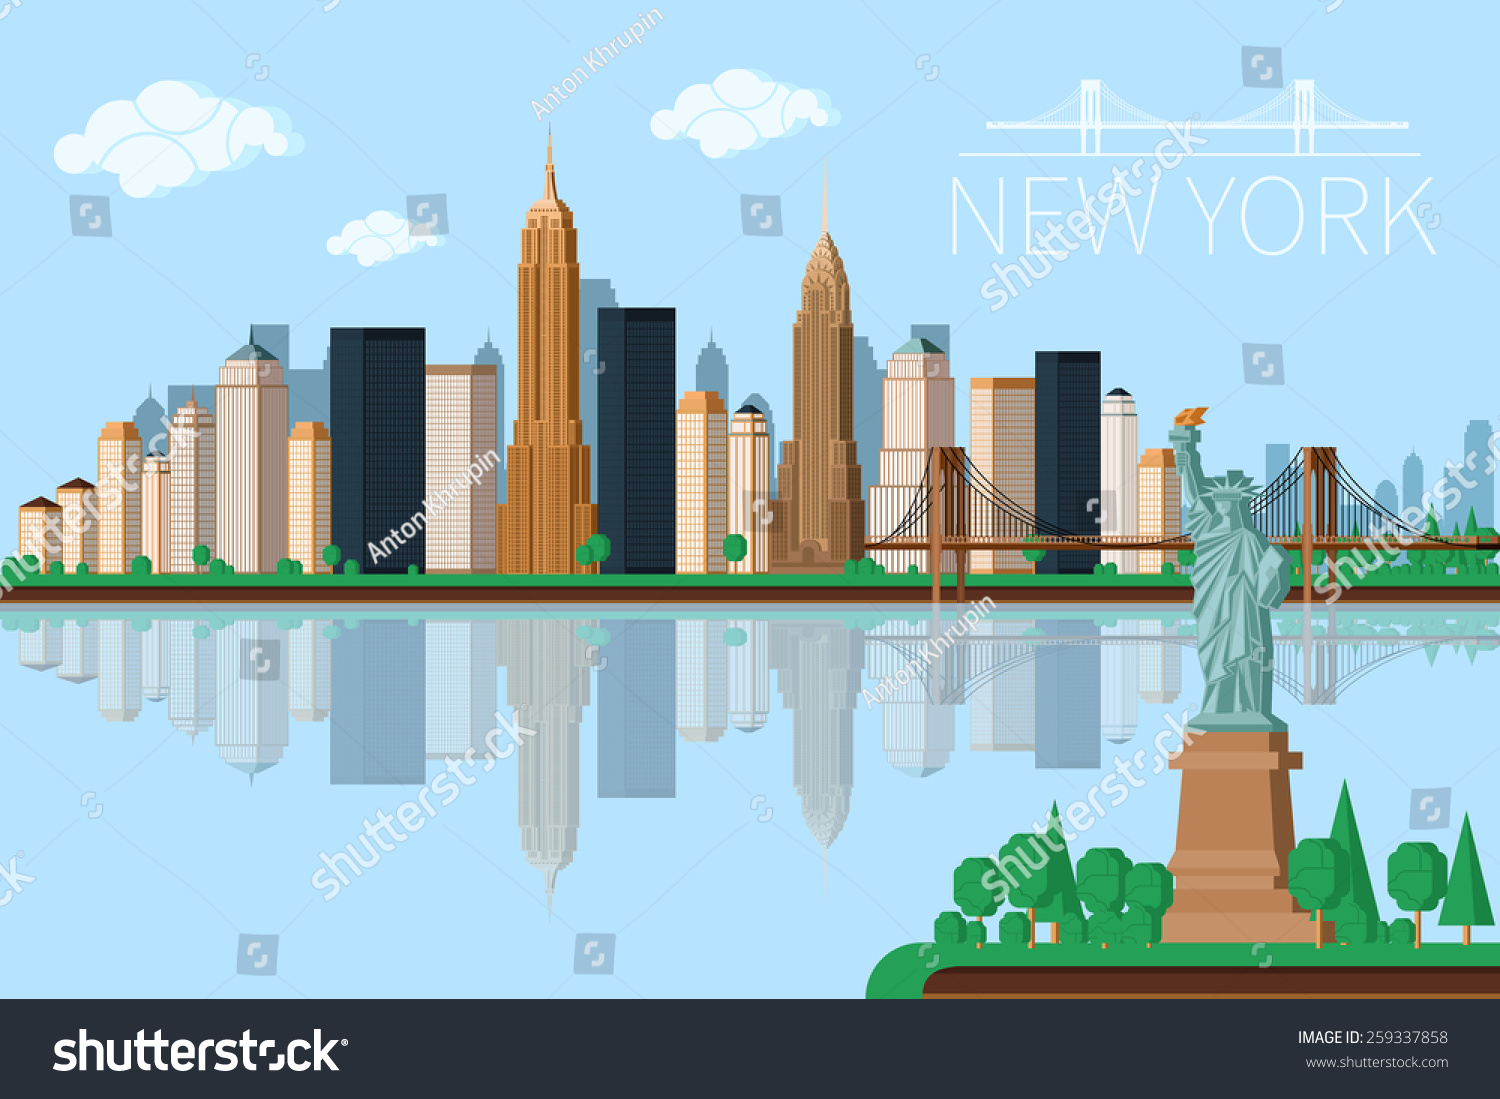 SVG of New York city architecture vector illustration. Skyline svg